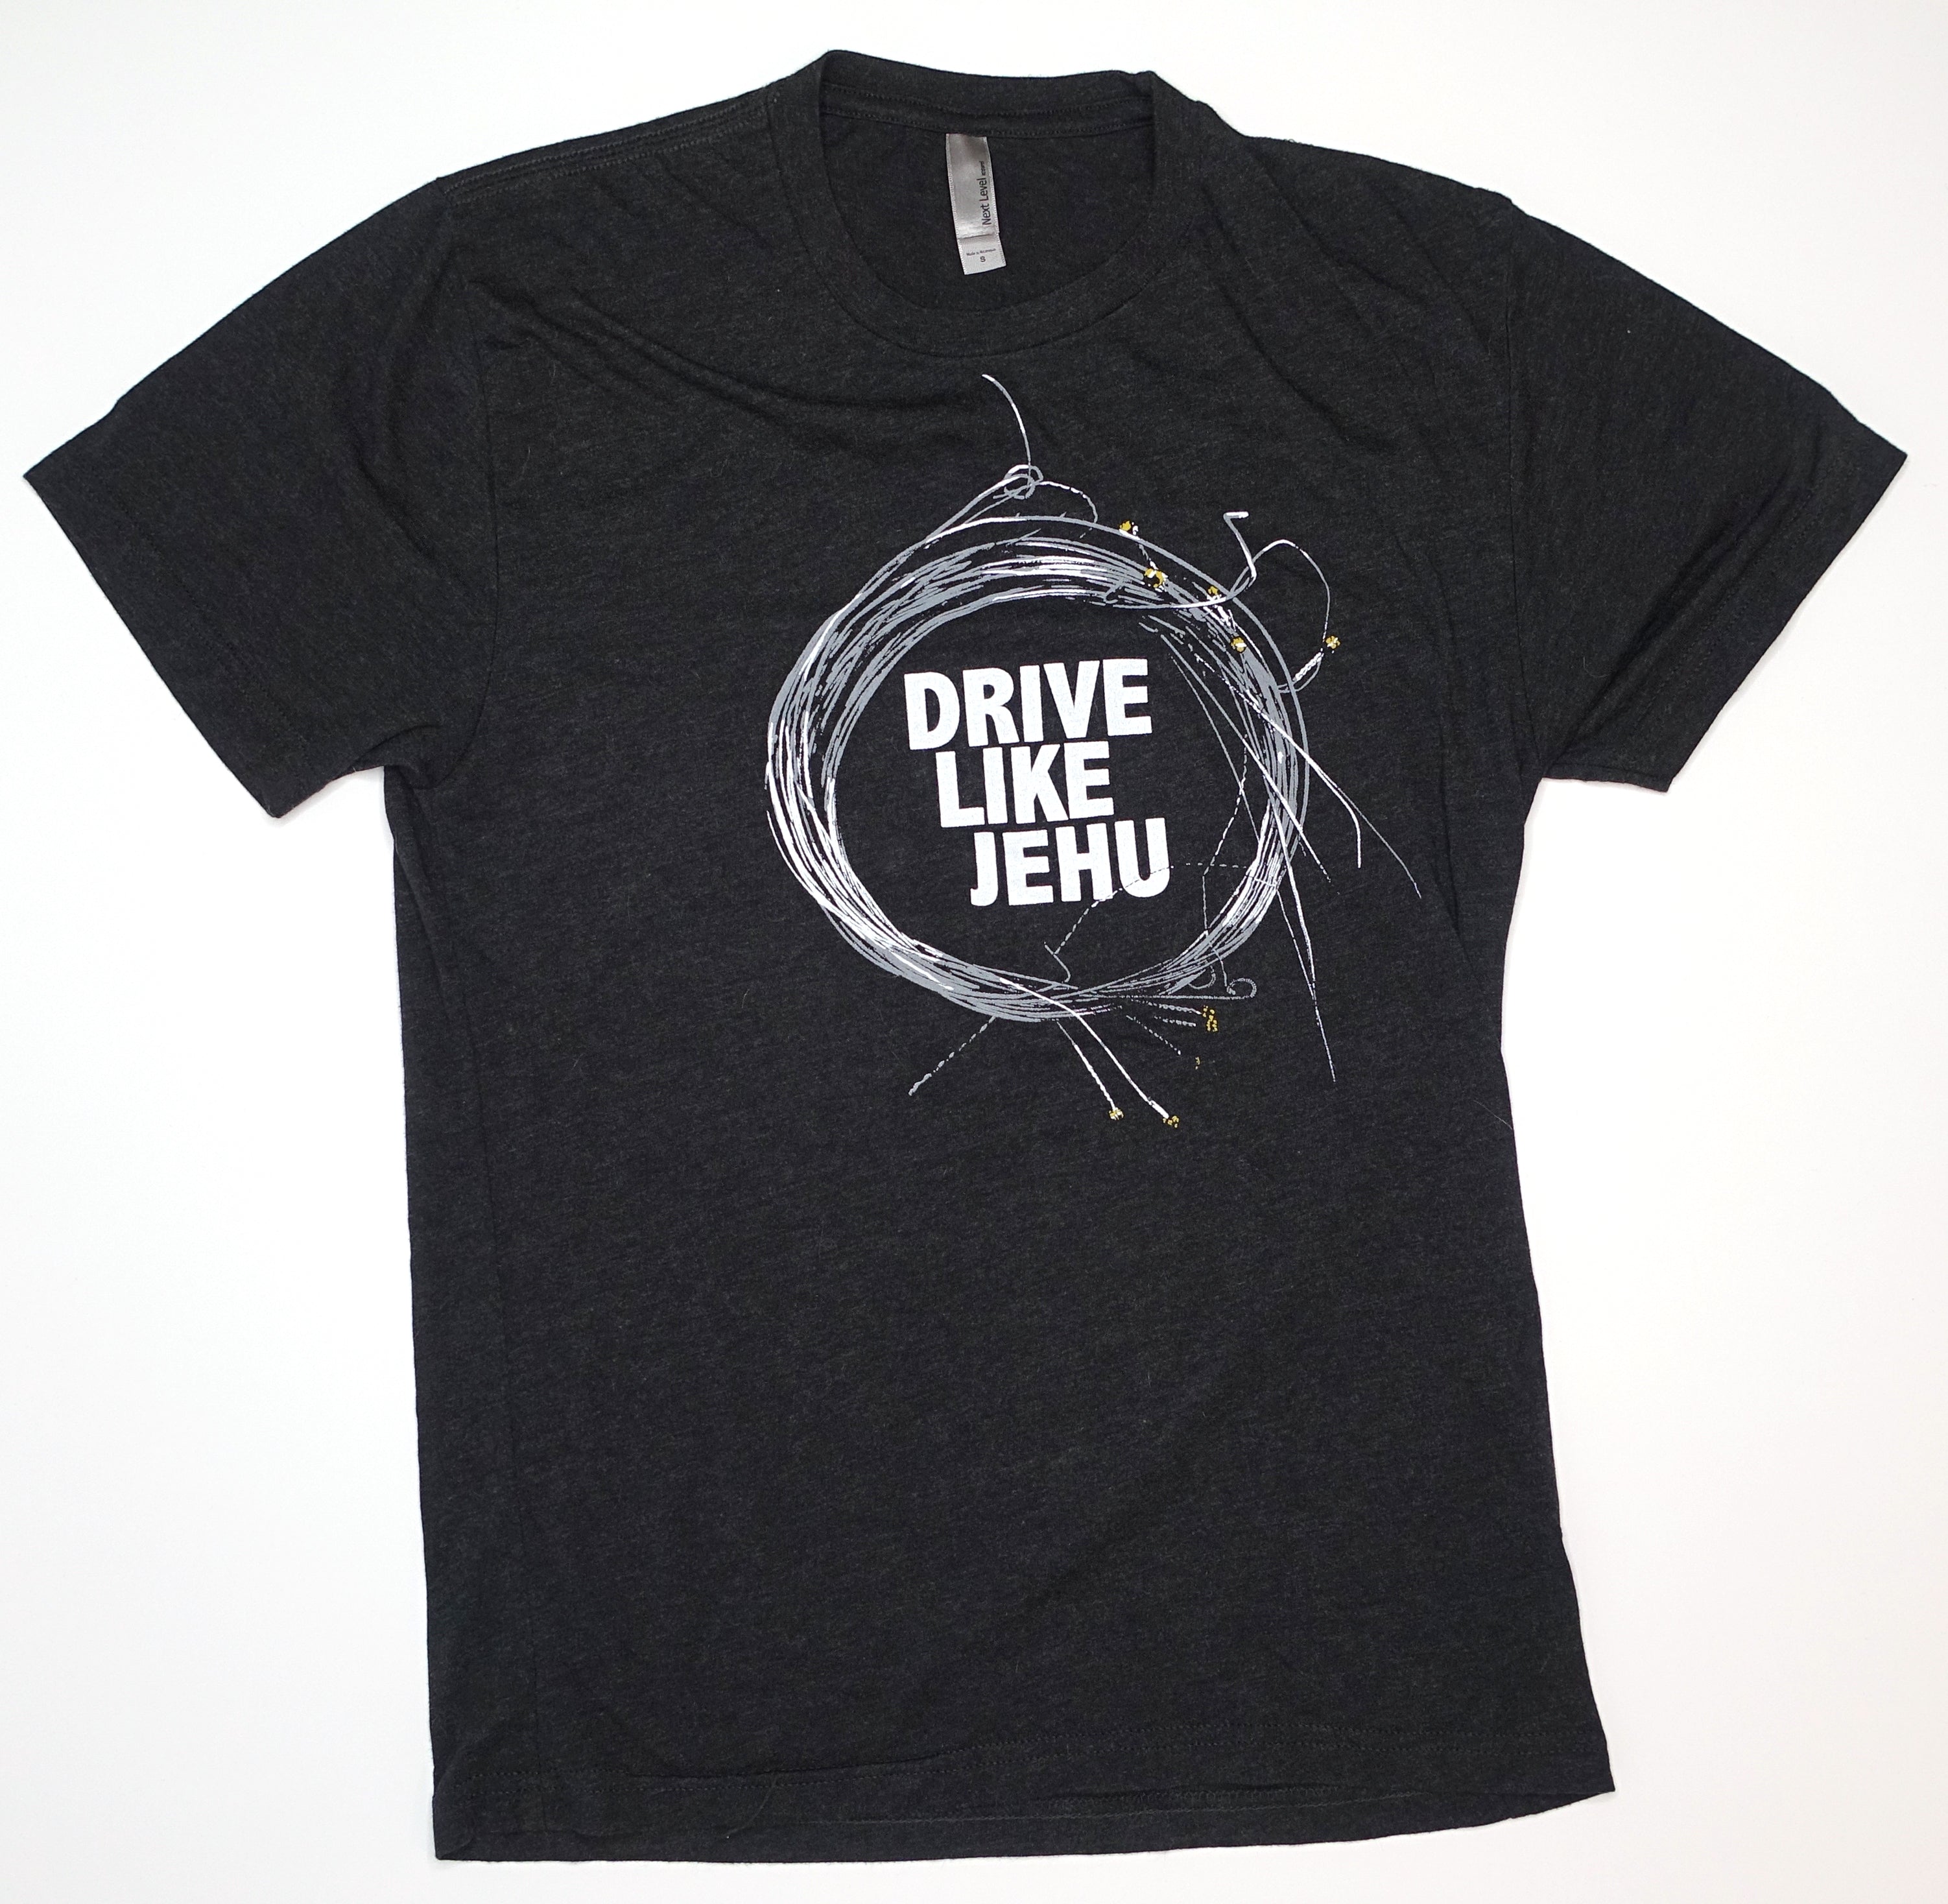 Drive Like Jehu - Strings Tour Shirt Size Small